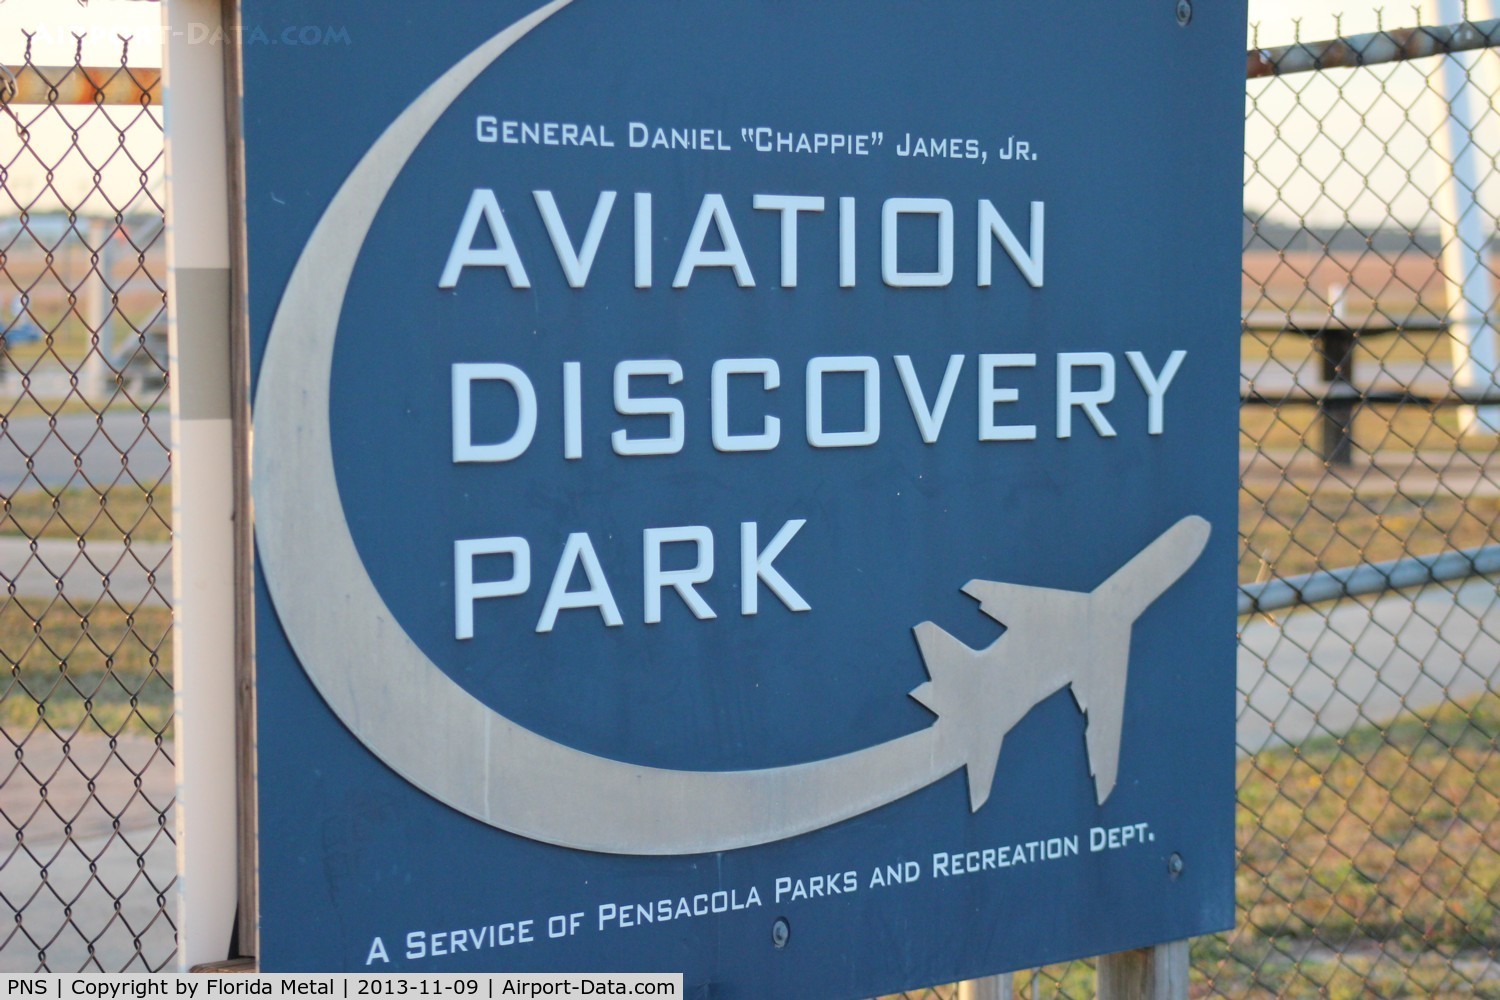 Pensacola Gulf Coast Regional Airport (PNS) - Aviation Discovery Park at Pensacola